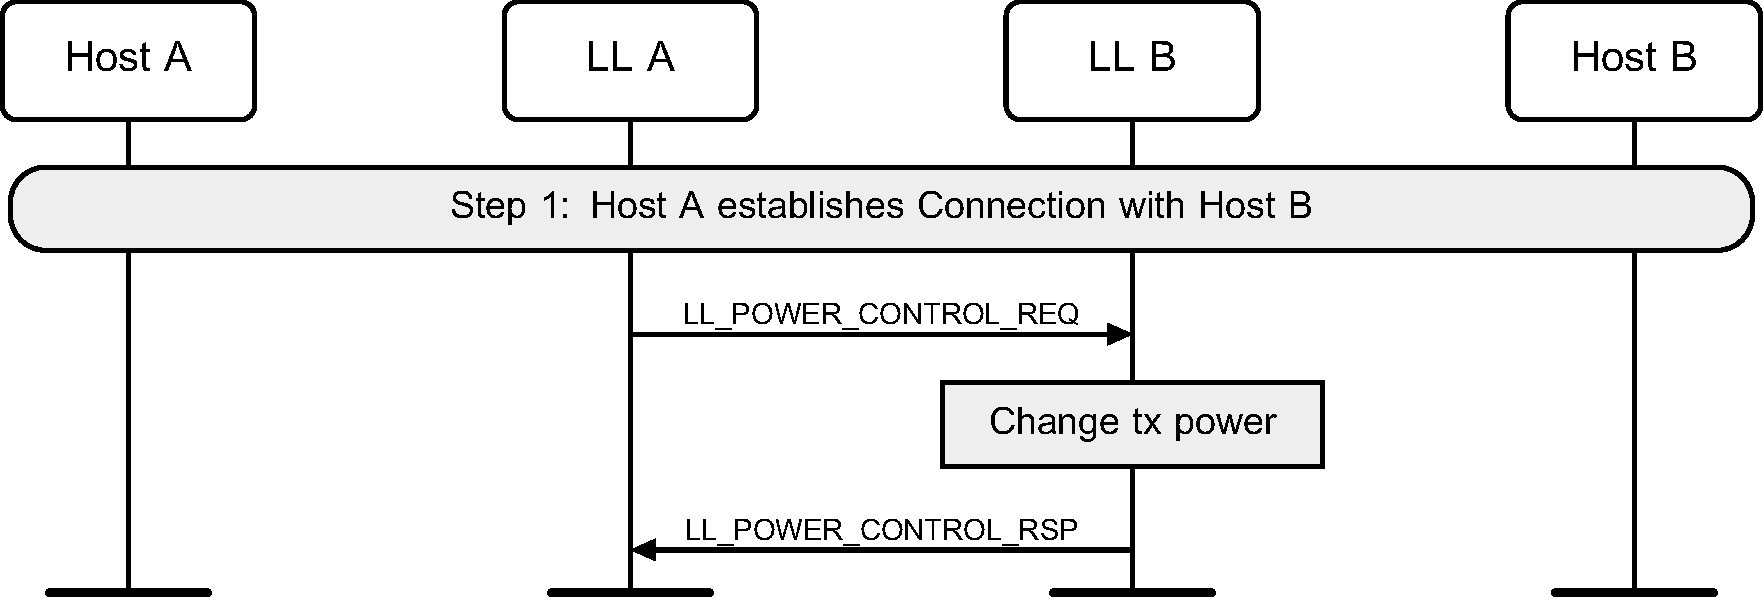 Power Control Request procedure to request remote transmit power update